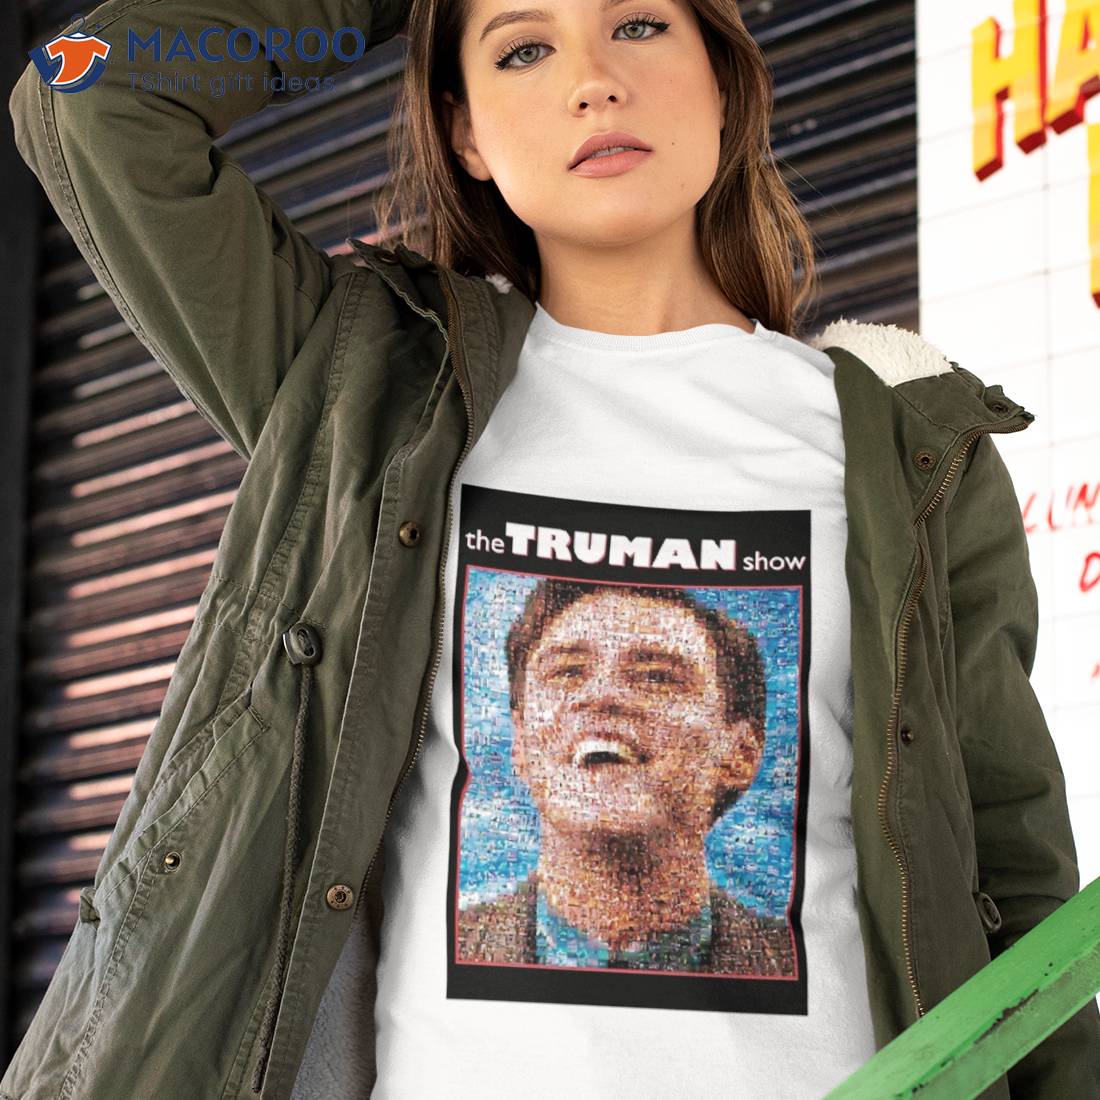 Vintage Film Truman Show Shirt